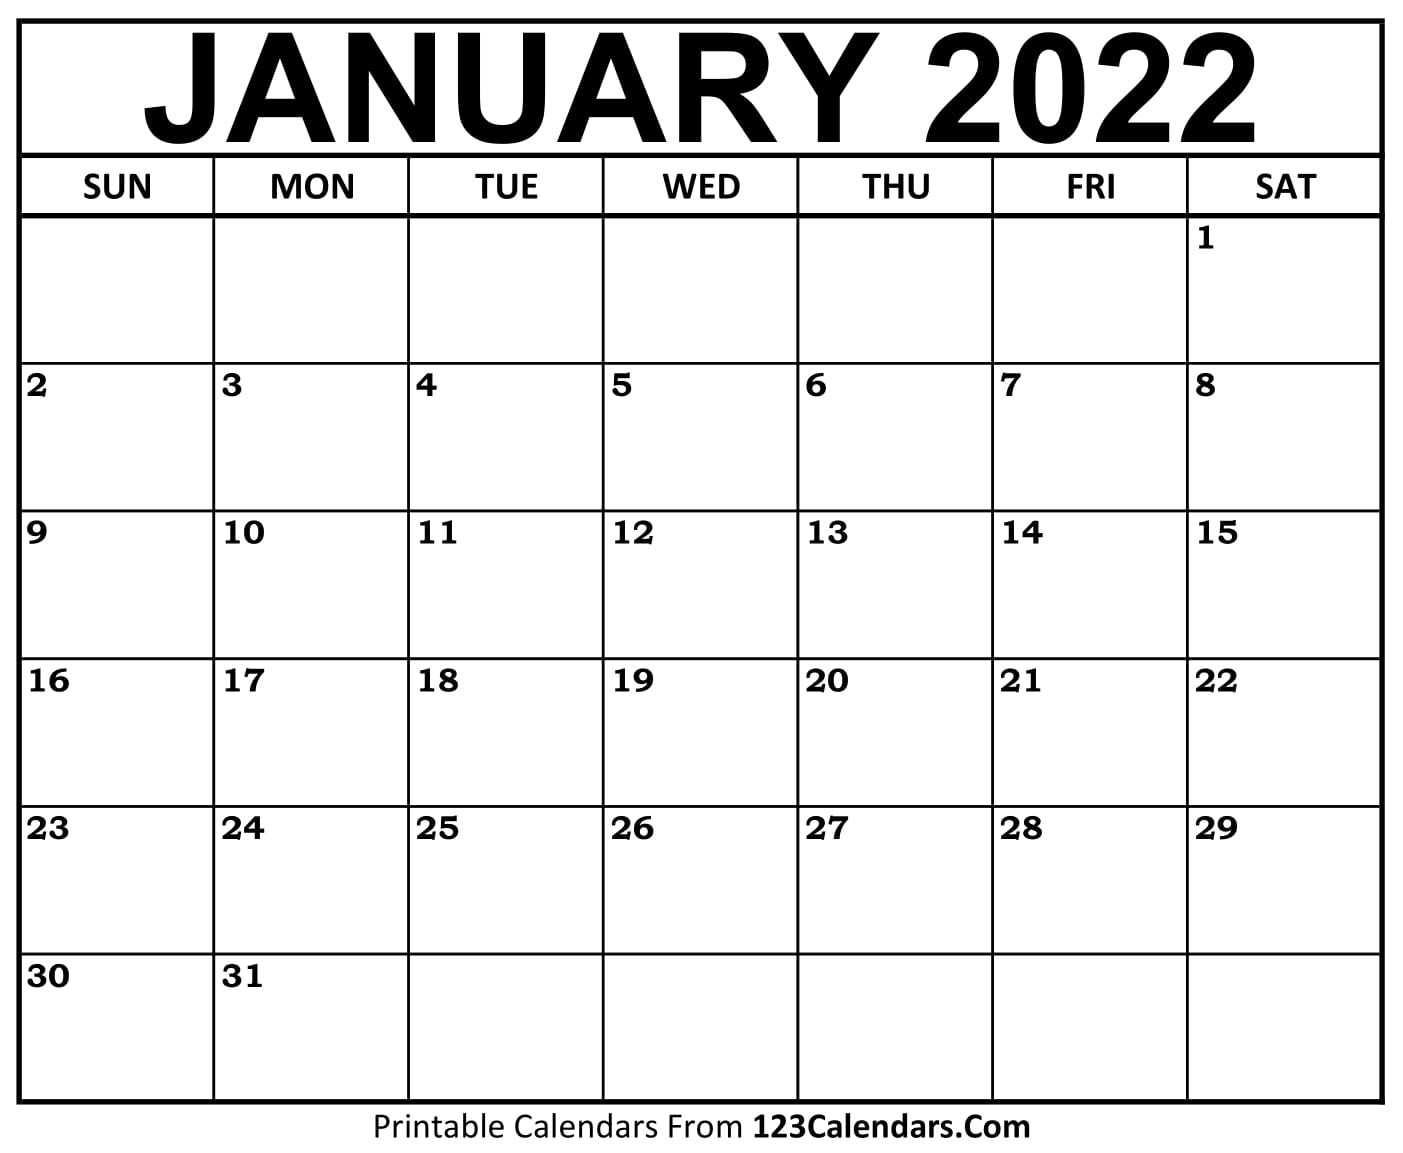 Get January 2022 Crowd Calendar